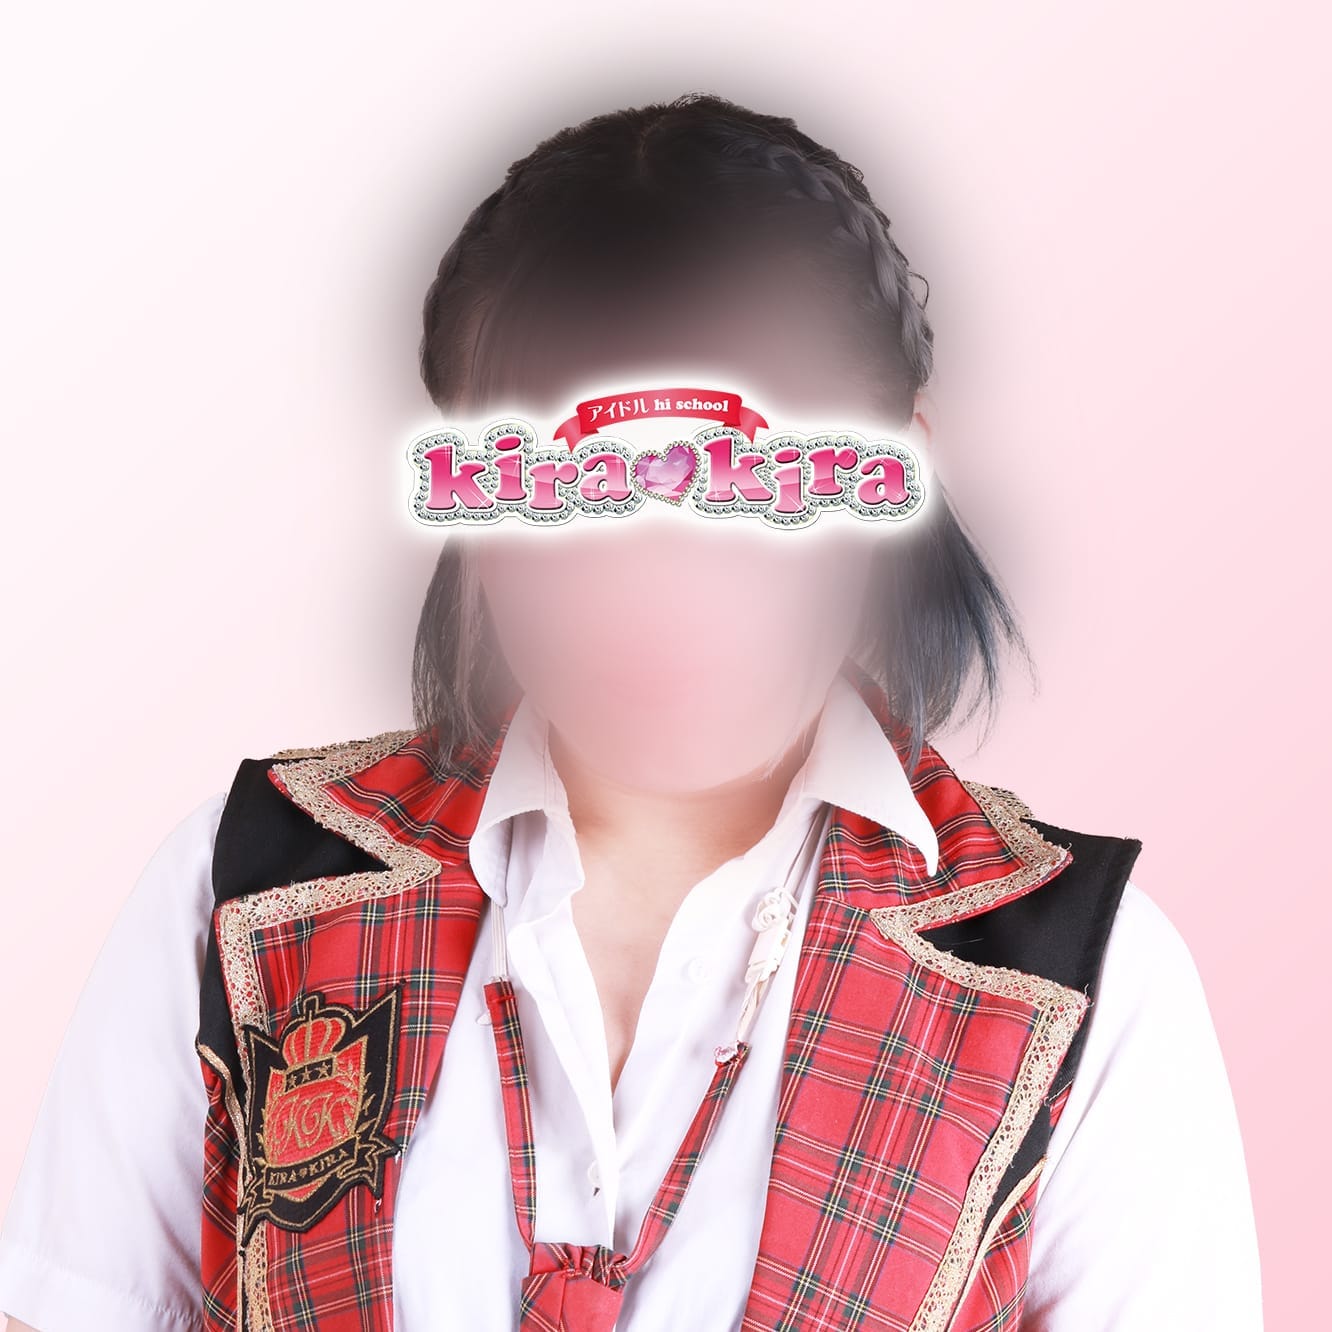 No.24 渡辺【おしとやかな美女形IDOL】 | アイドル hi school KiraKira(大和)